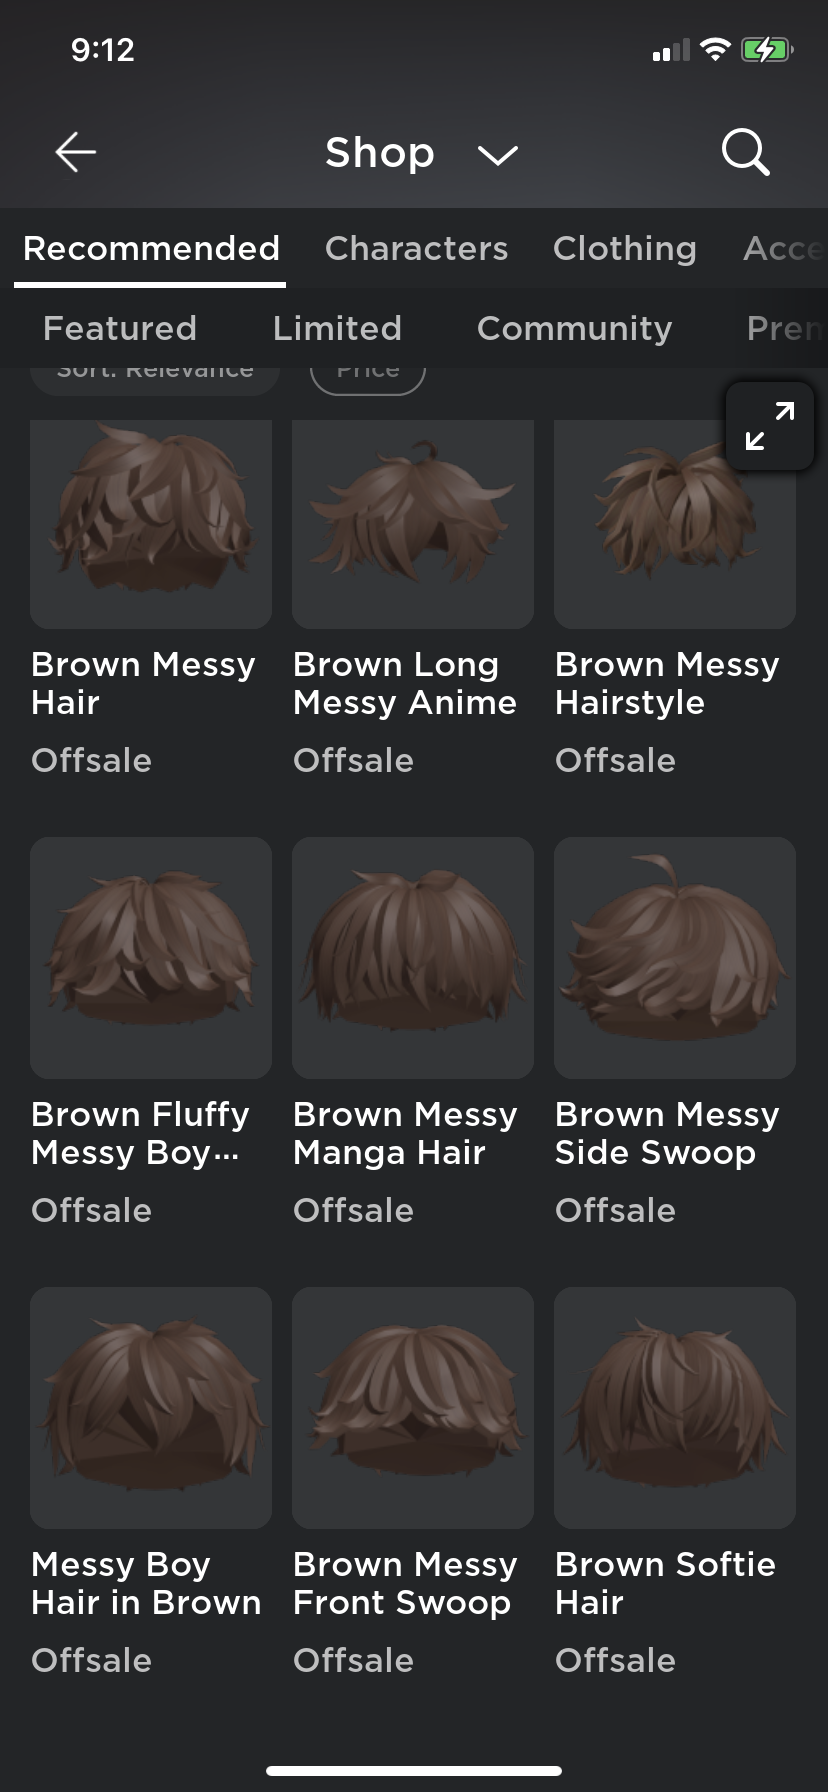 Brown Fluffy Messy Boy Hair